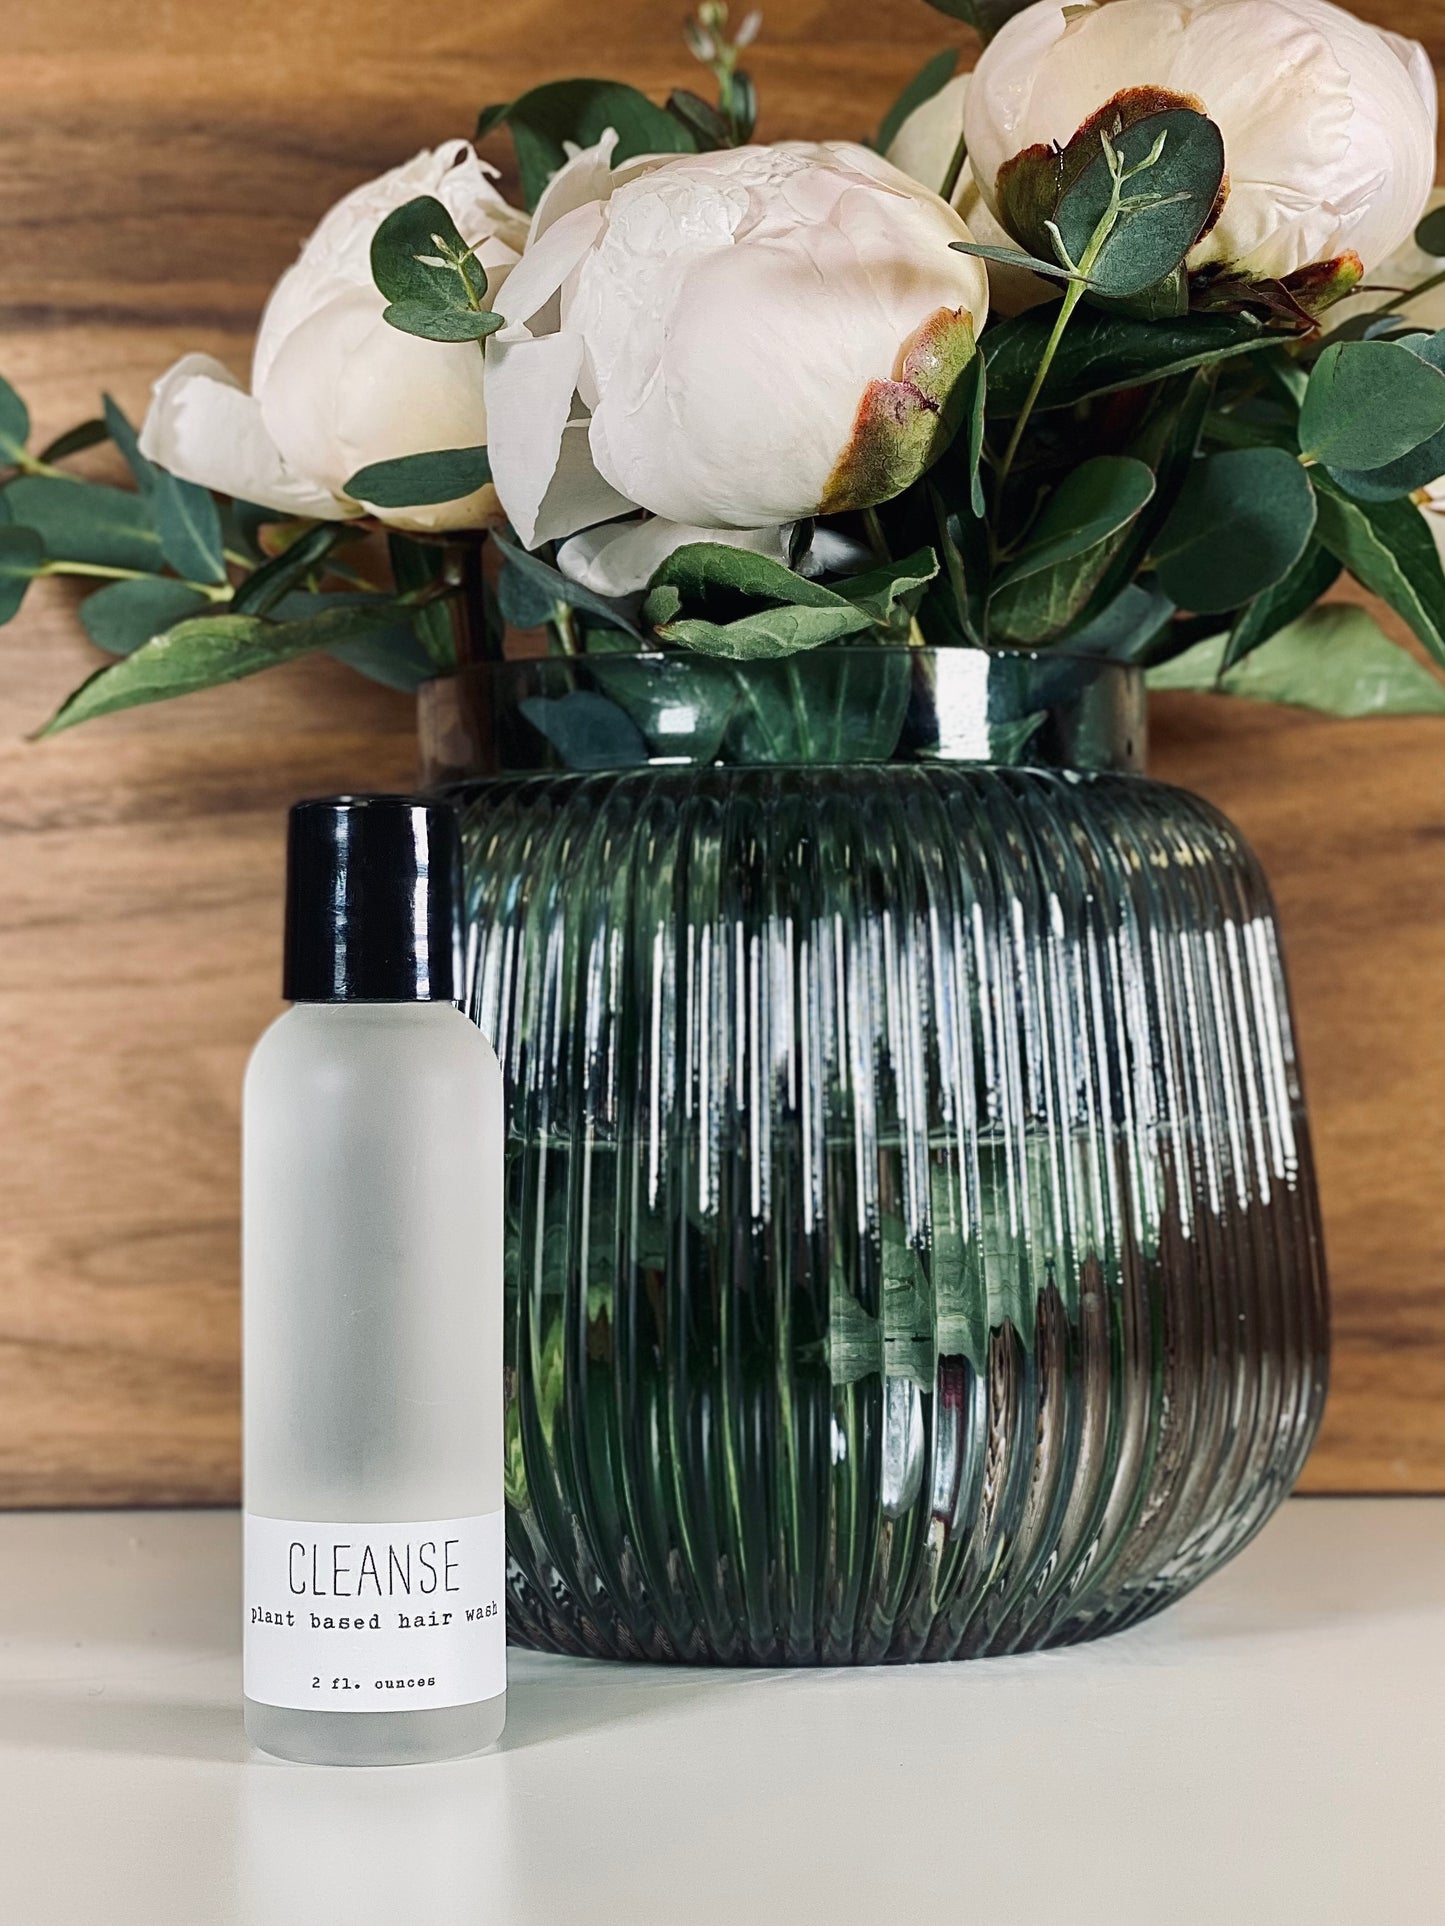 Cleanse - Plant Based Hair Wash